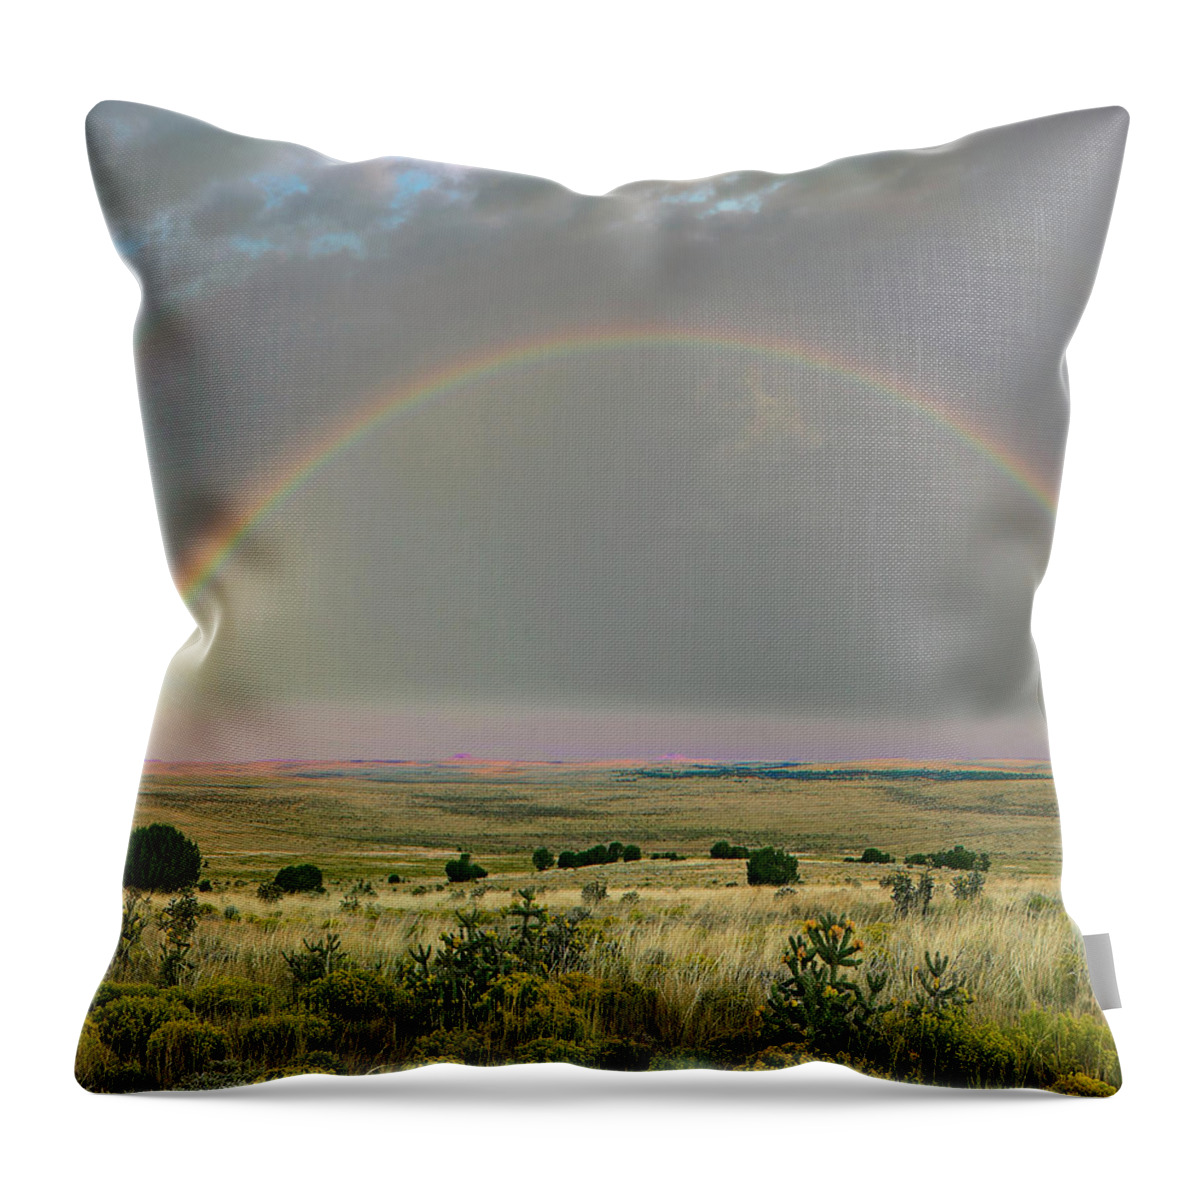 00586349 Throw Pillow featuring the photograph Double Rainbow, Apishapa State Wildlife Area, Colorado by Tim Fitzharris